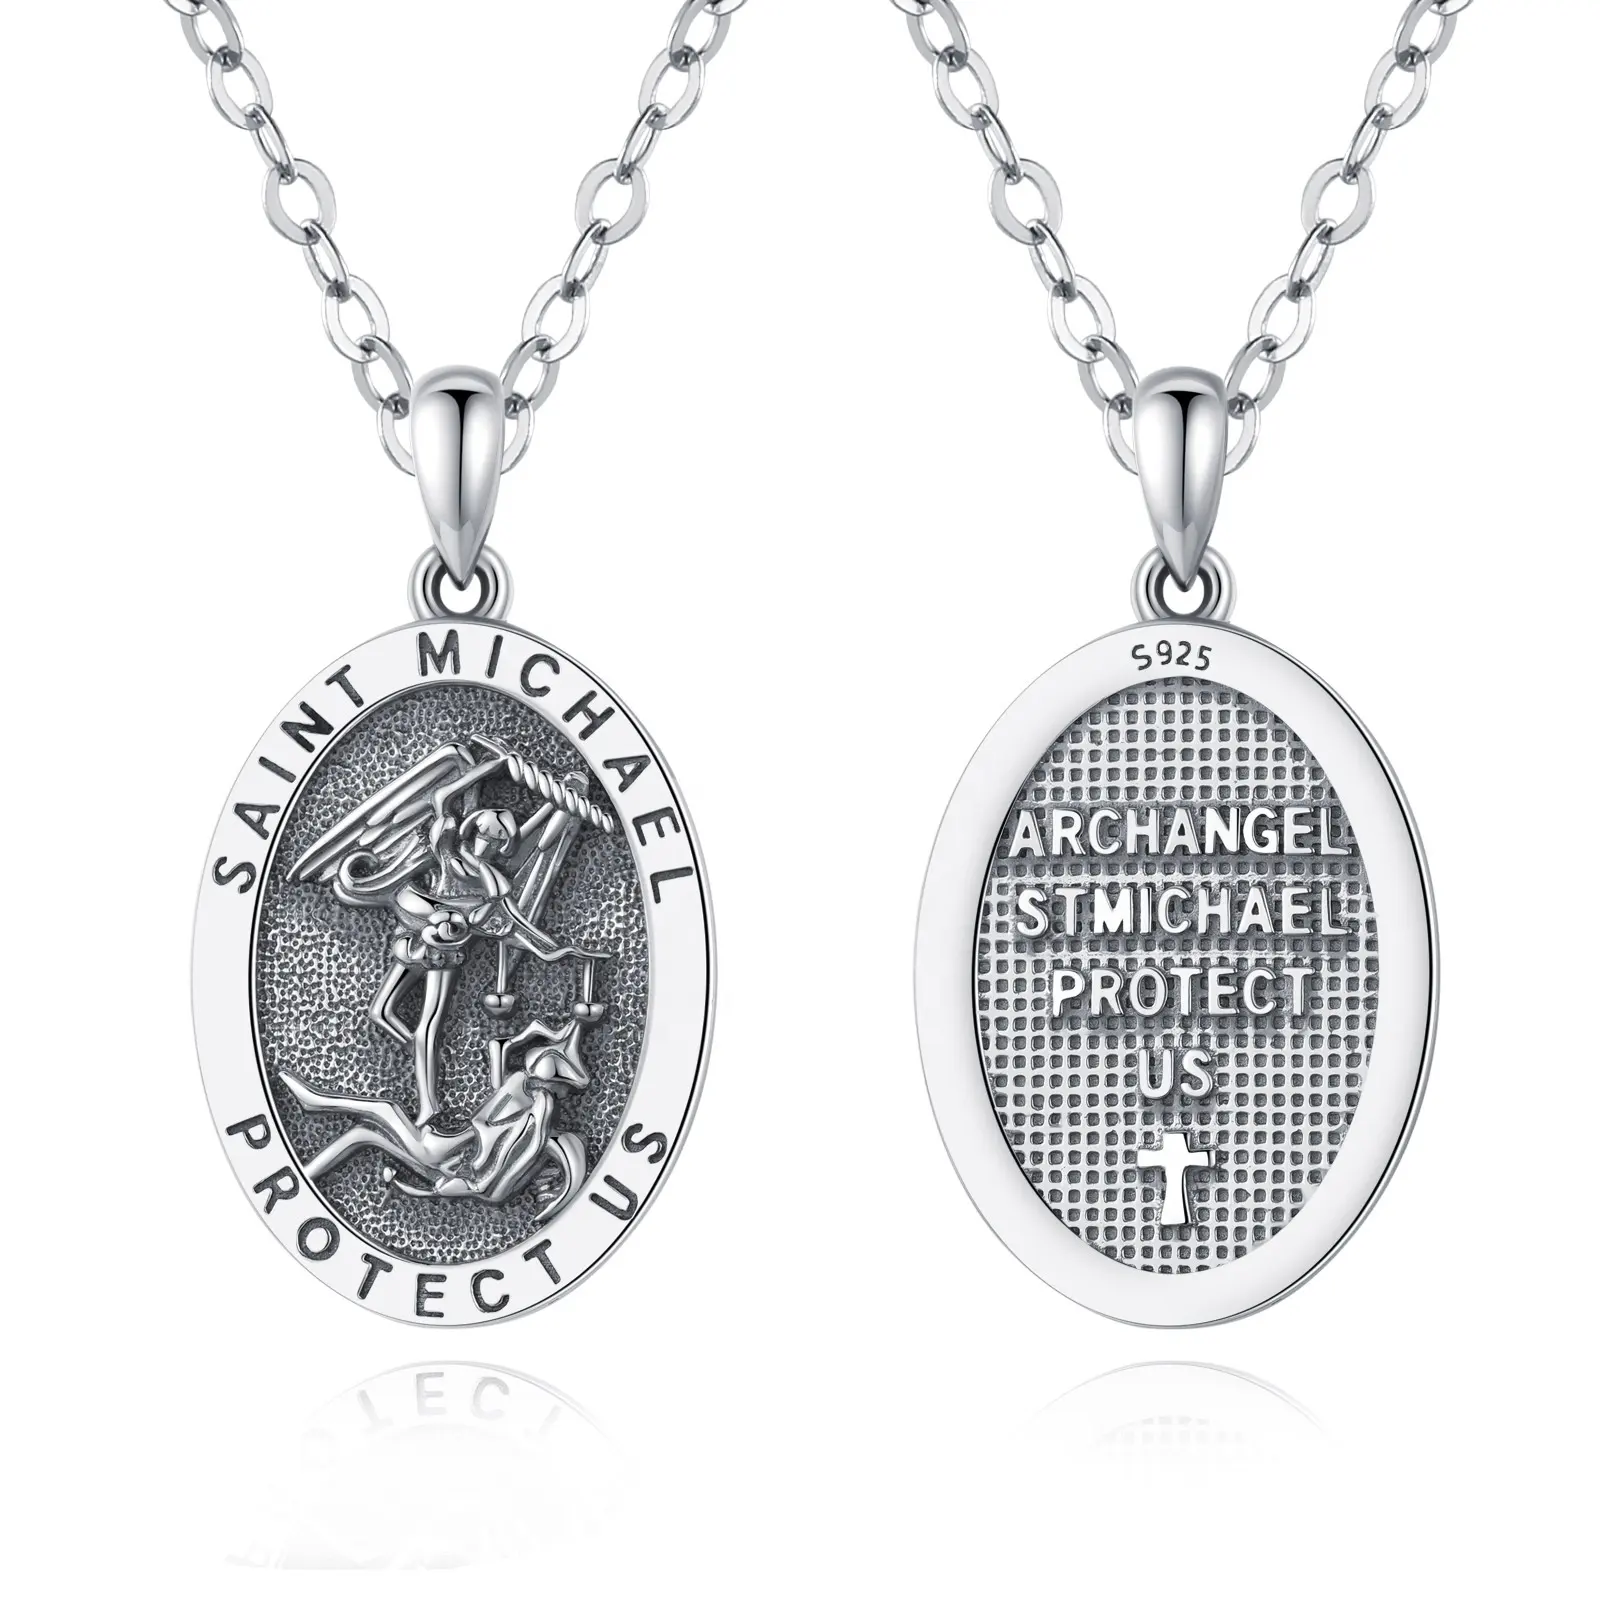 Merryshine fashion vintage jewelry 925 sterling silver saint michael pendant necklace